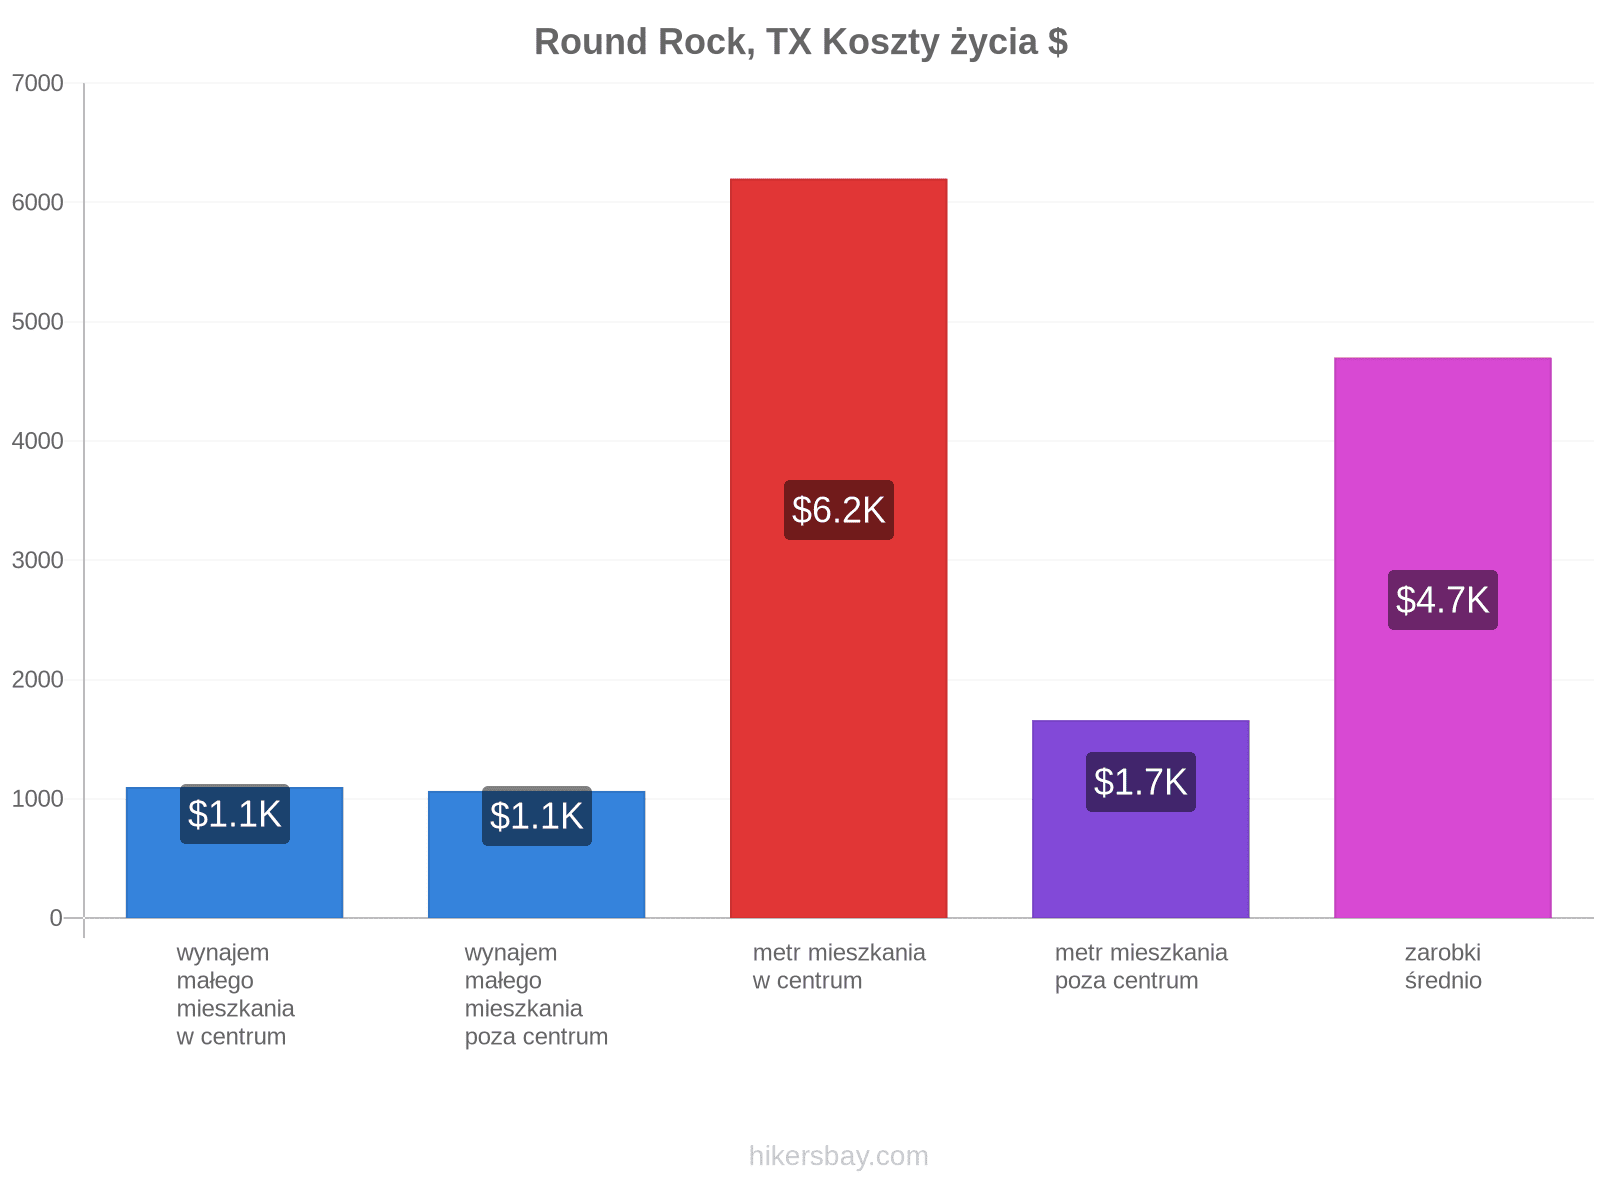 Round Rock, TX koszty życia hikersbay.com